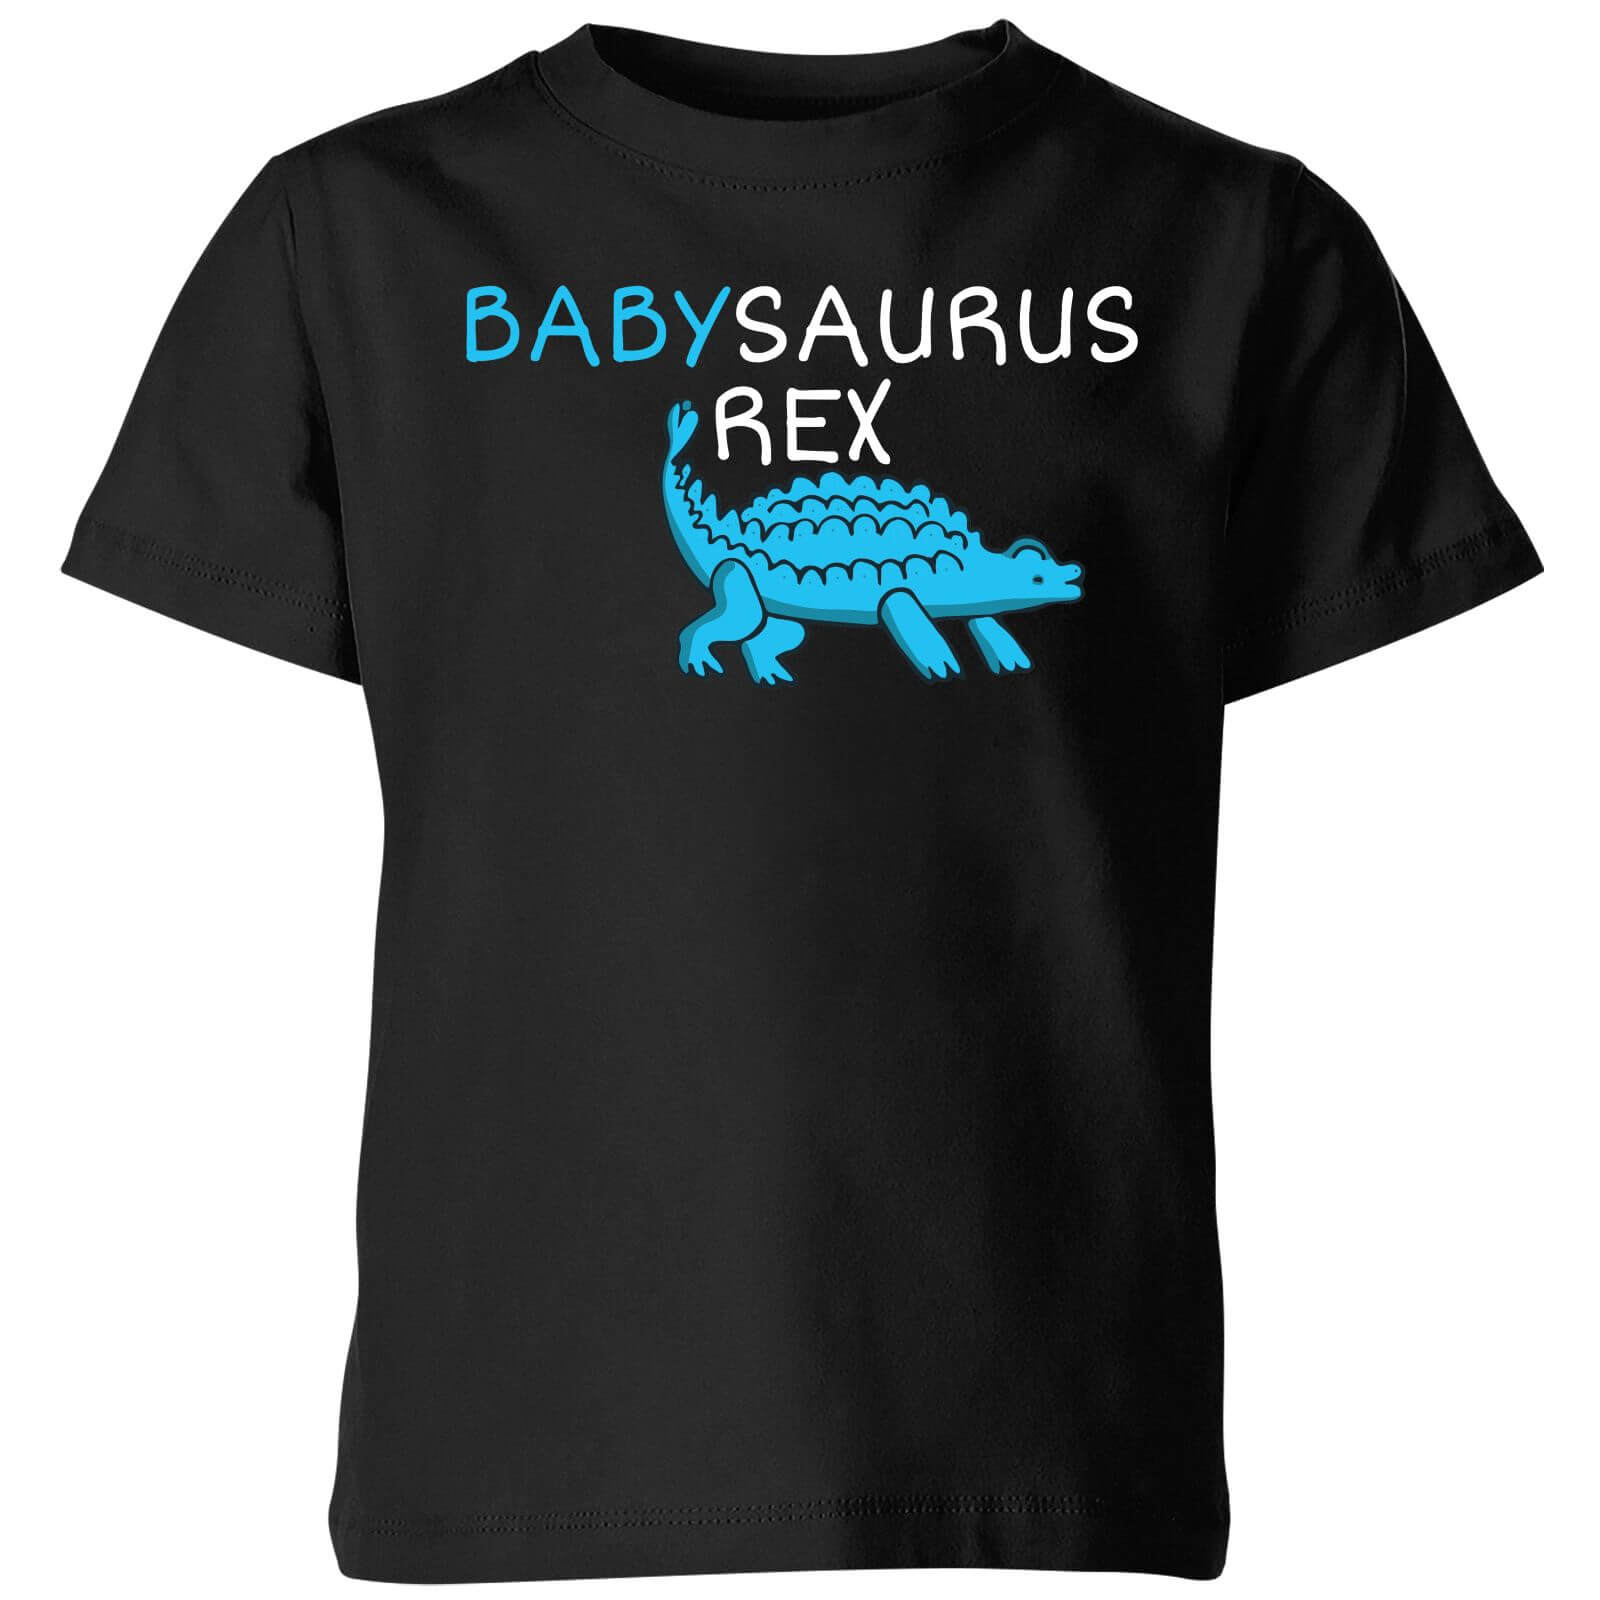 Babysaurus Rex Kids' T-Shirt - Black - 3-4 Years - Black